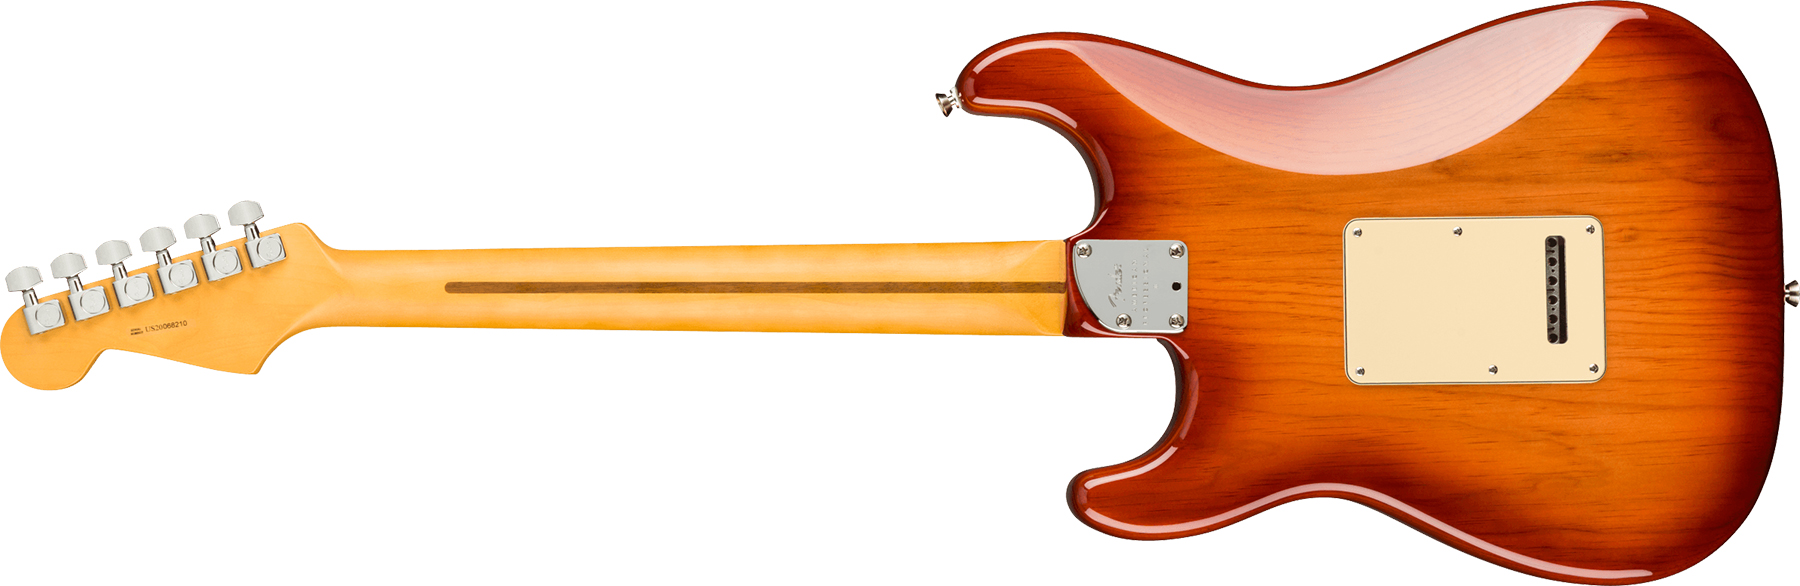 Fender Strat American Professional Ii Usa Mn - Sienna Sunburst - Guitarra eléctrica con forma de str. - Variation 1